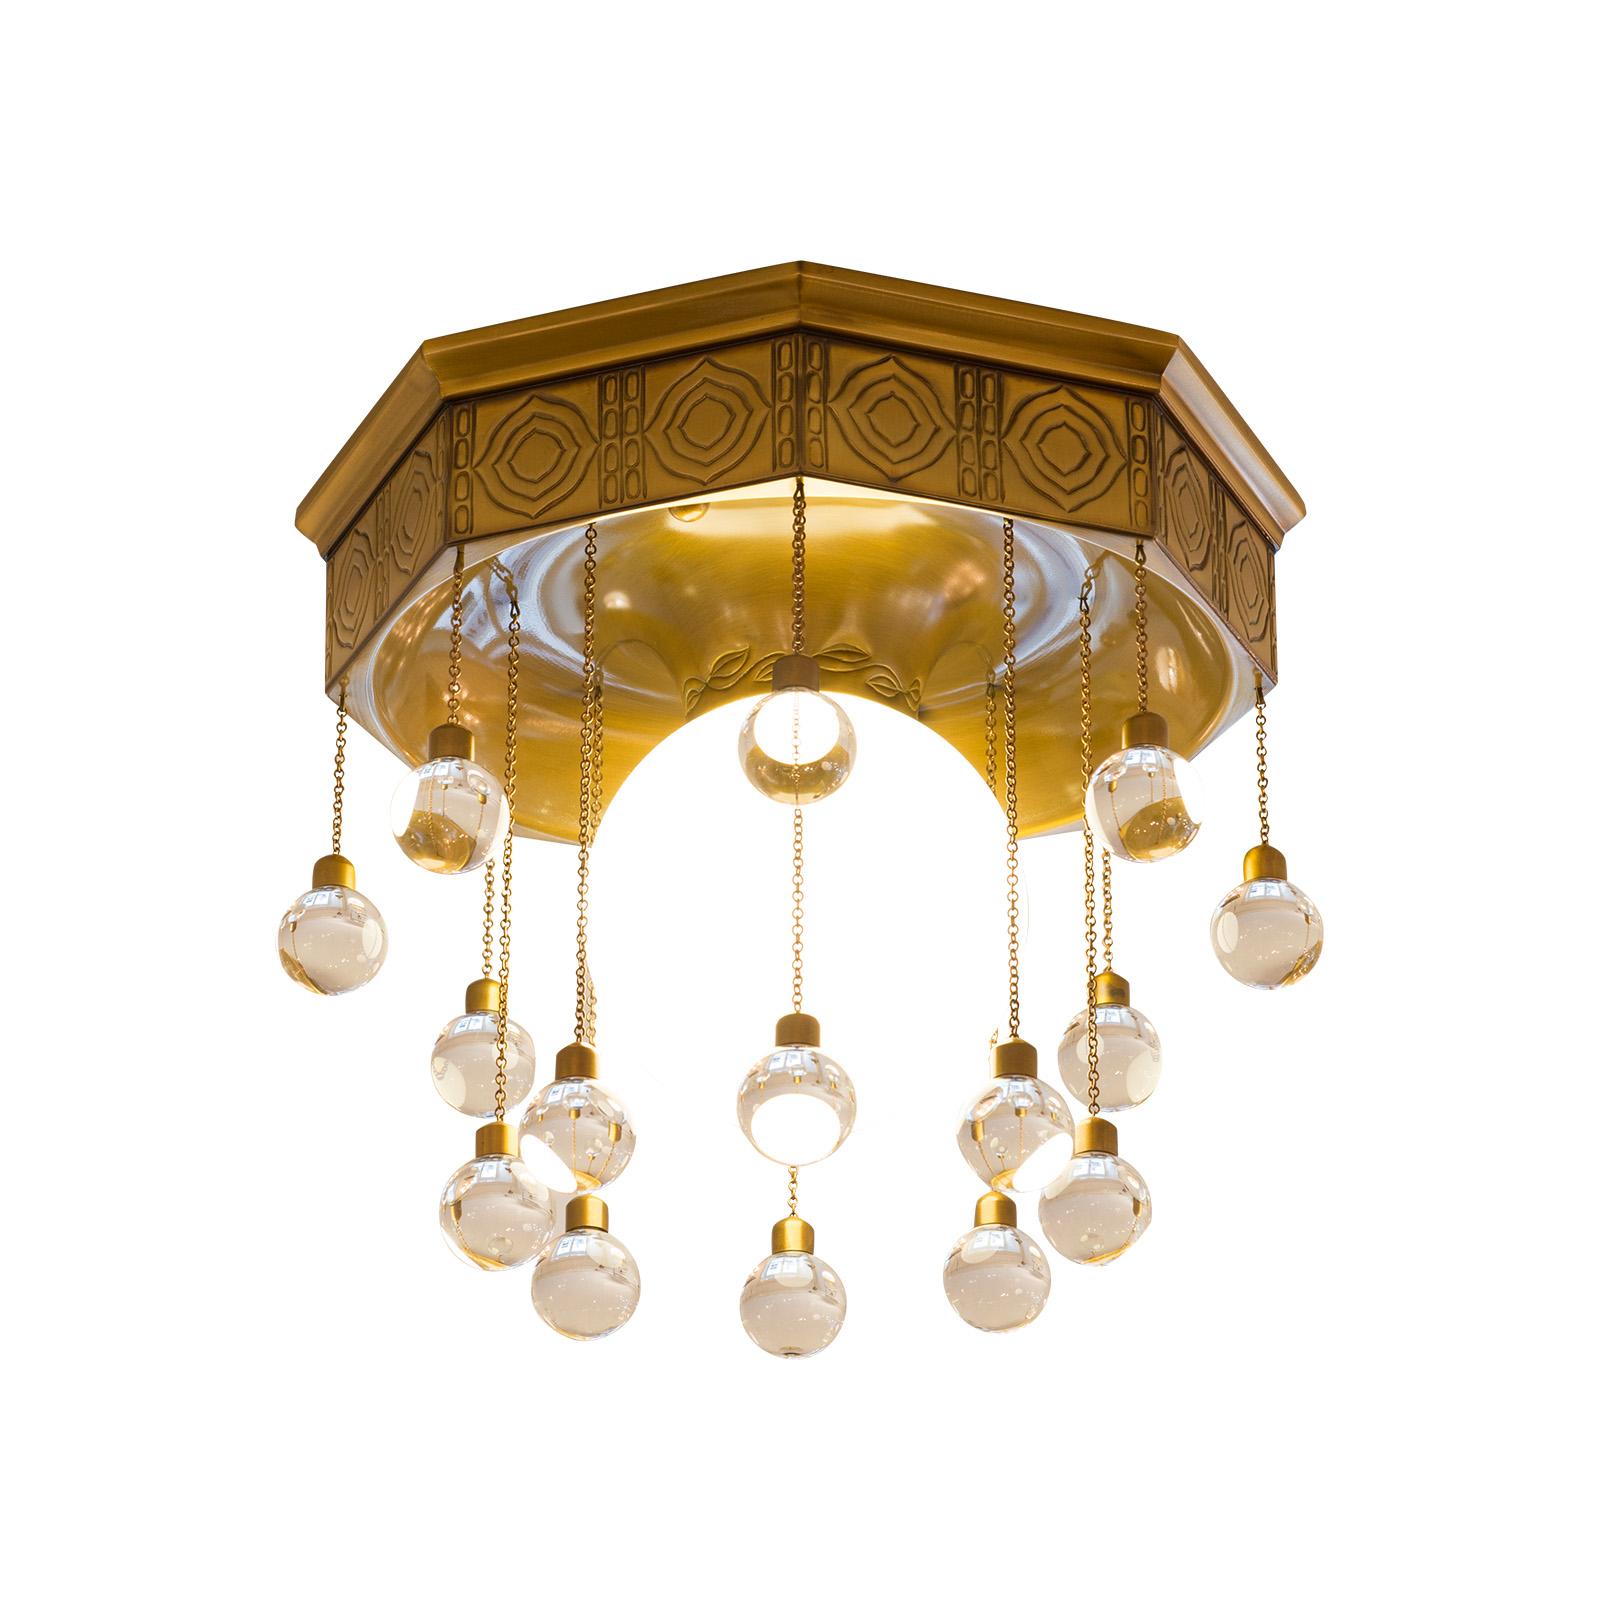 Austrian Josef Hoffmann & Wiener Werkstätte Stoclet Palais, Ceiling Lamp Brass Re-Edition For Sale